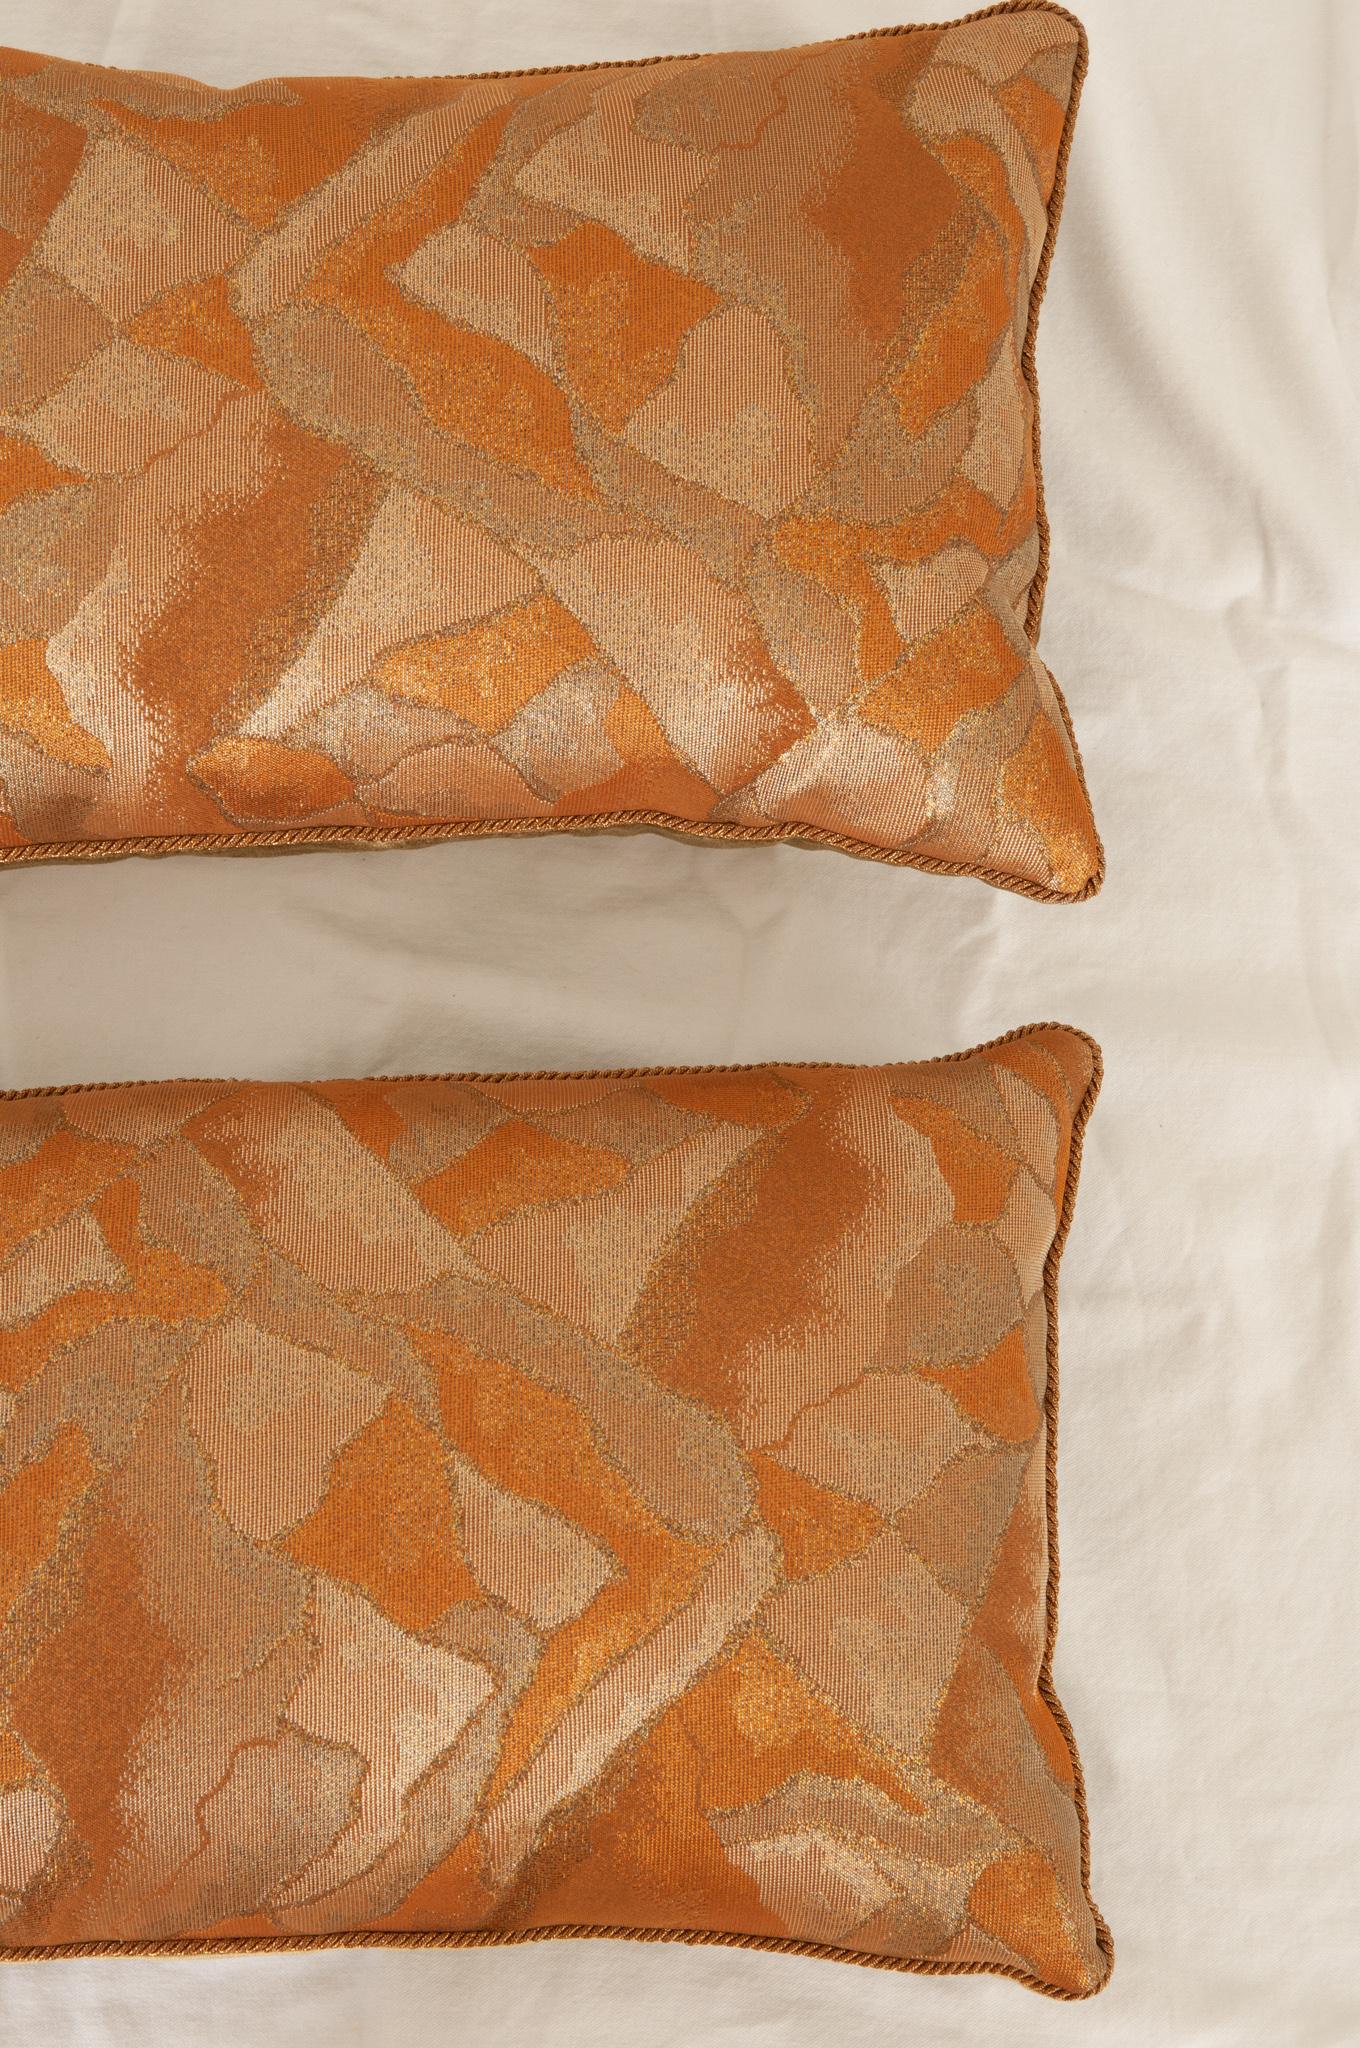 Other Pair of B.Viz Obi Robe Pillows For Sale